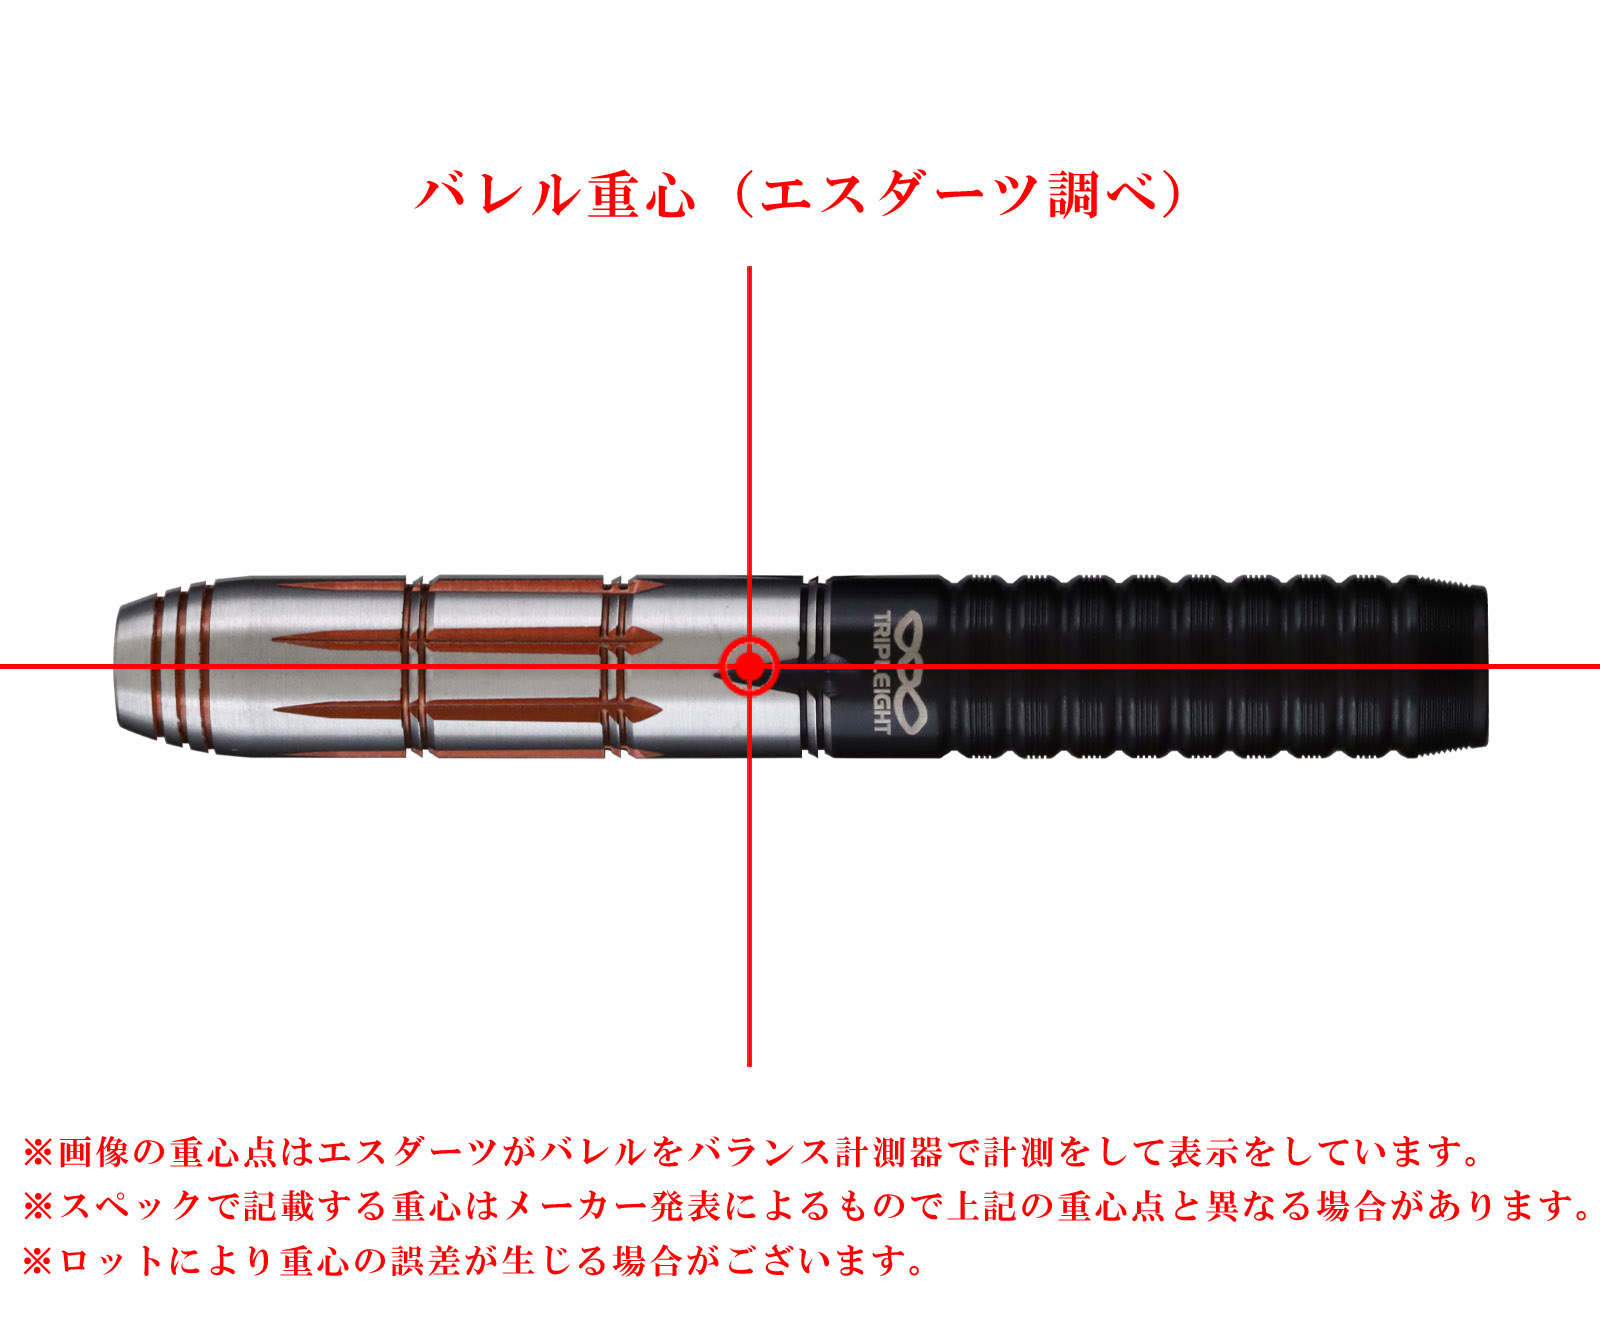 Darts & Soft-tip Darts & NO.5 | Darts Online Shop S-DARTS from JAPAN.